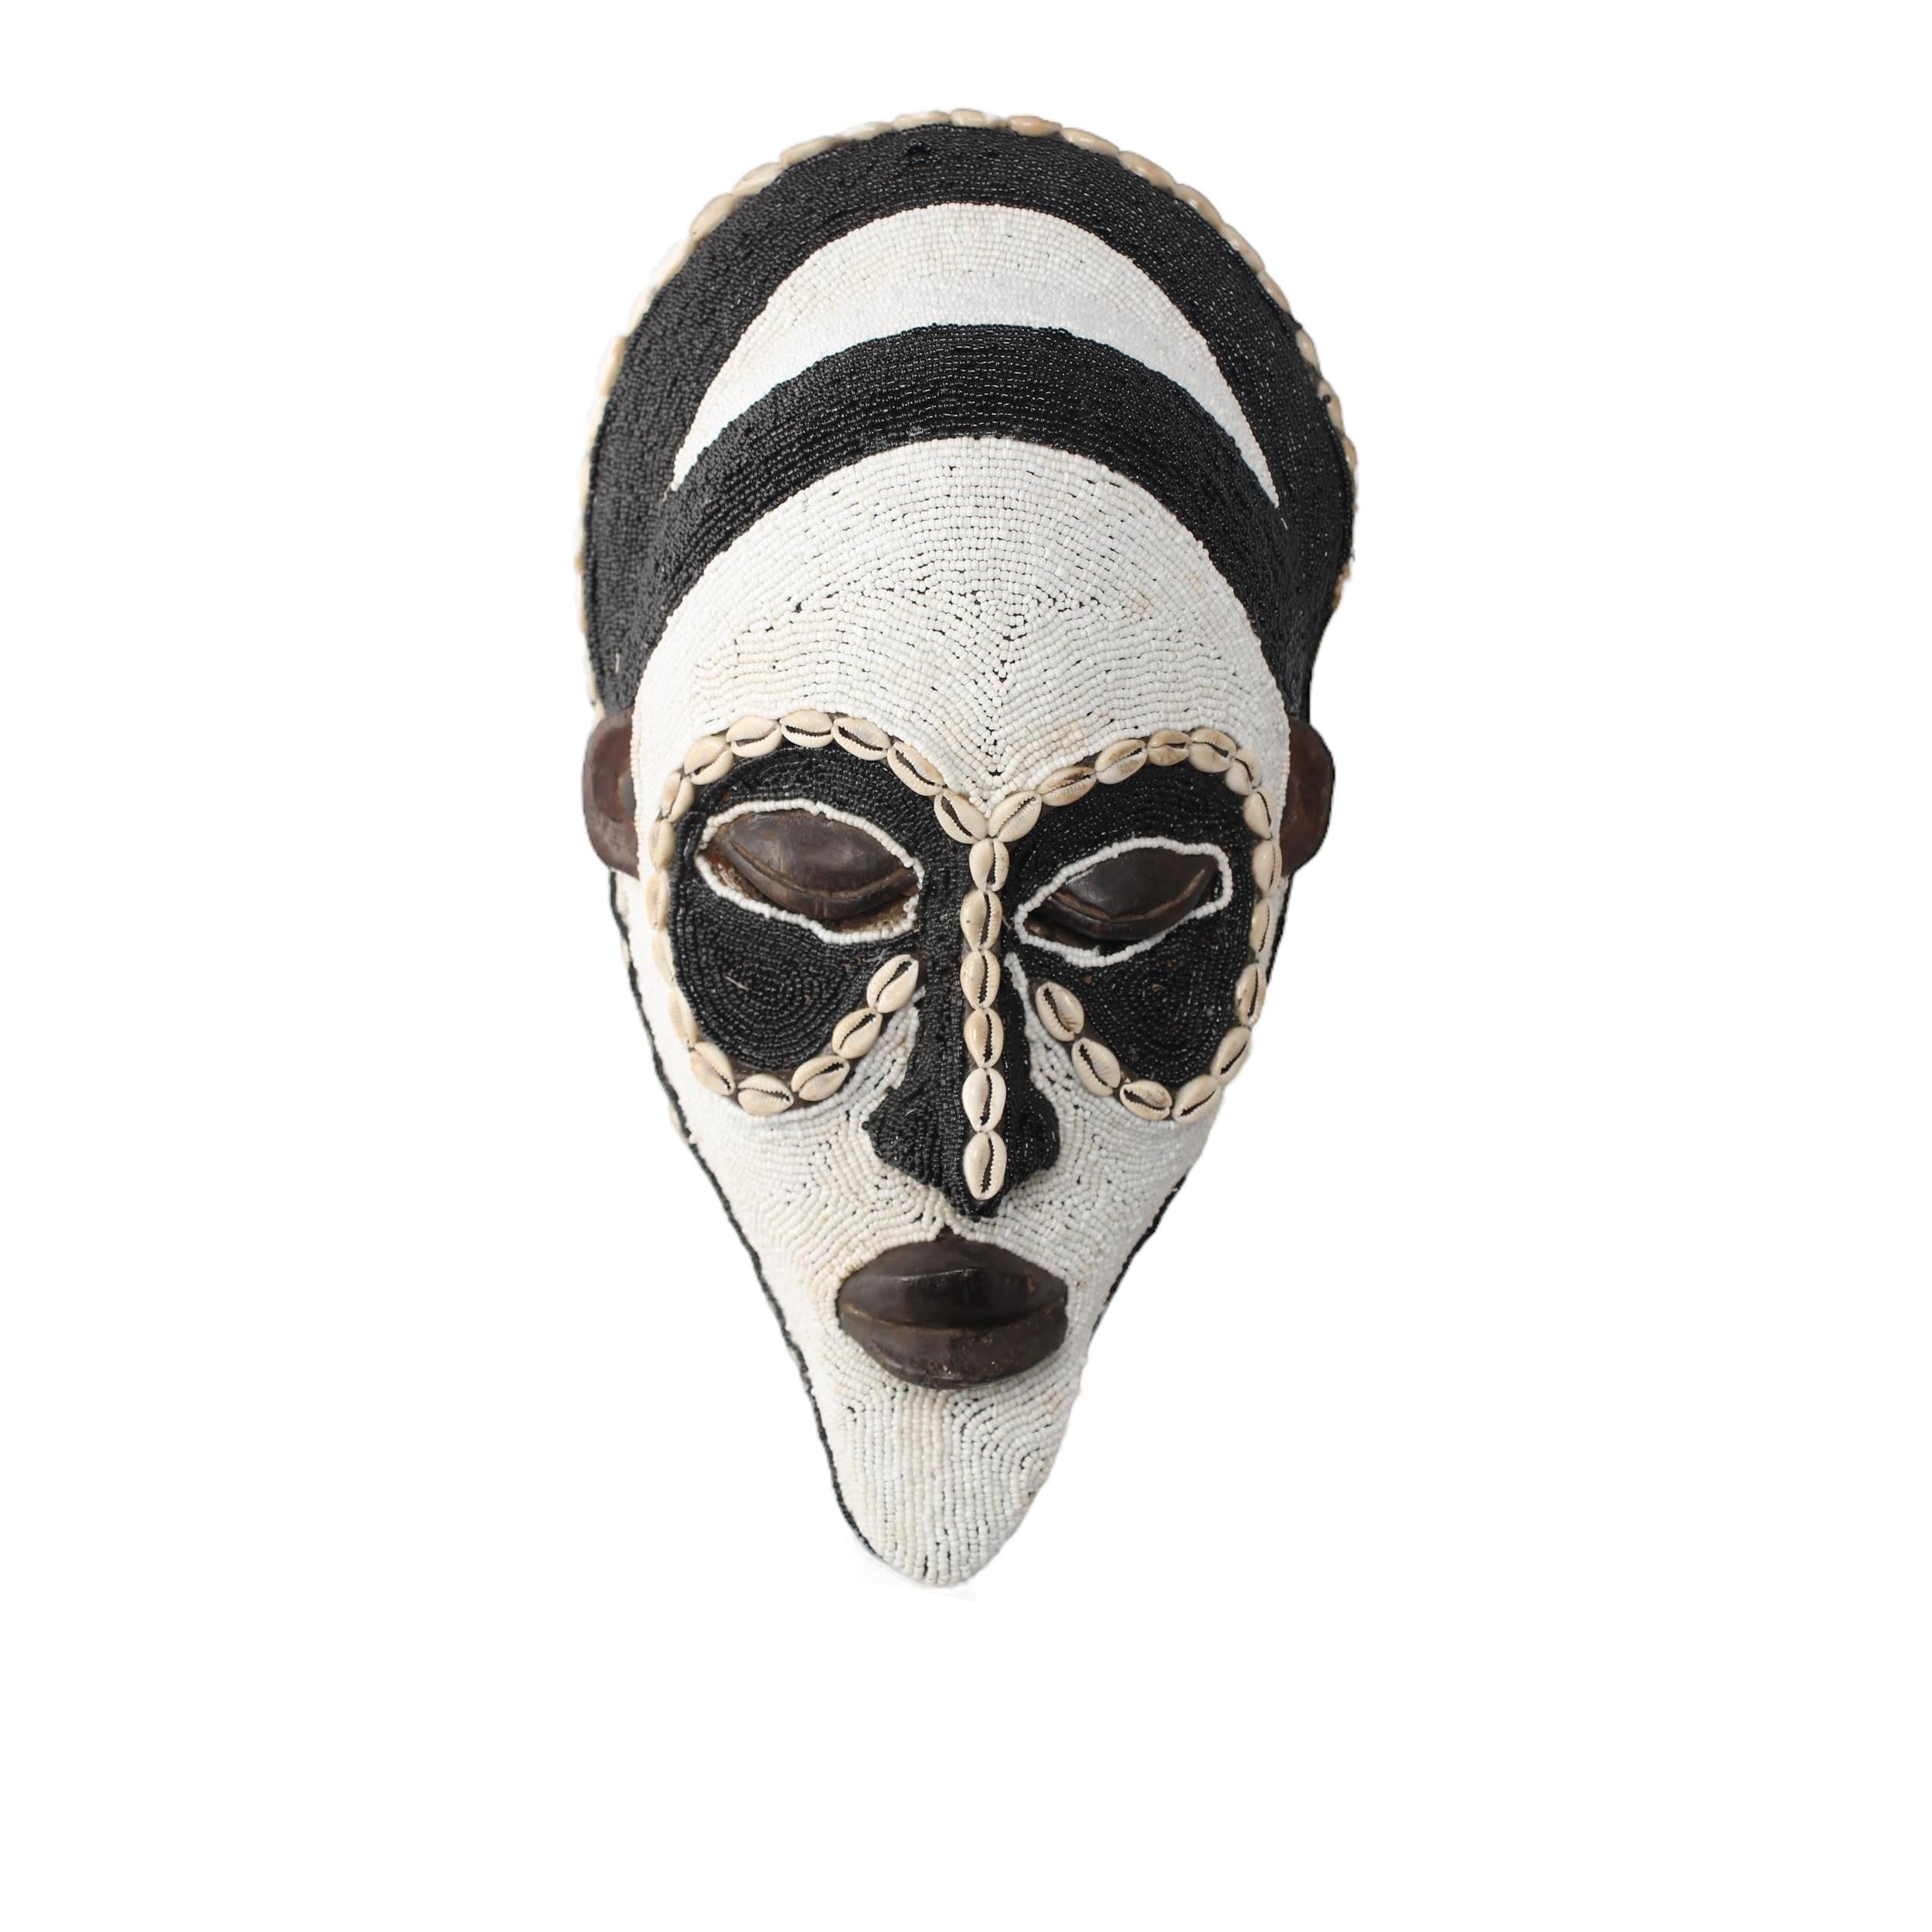 Chokwe Tribe Mask ~15.4" Tall - Mask